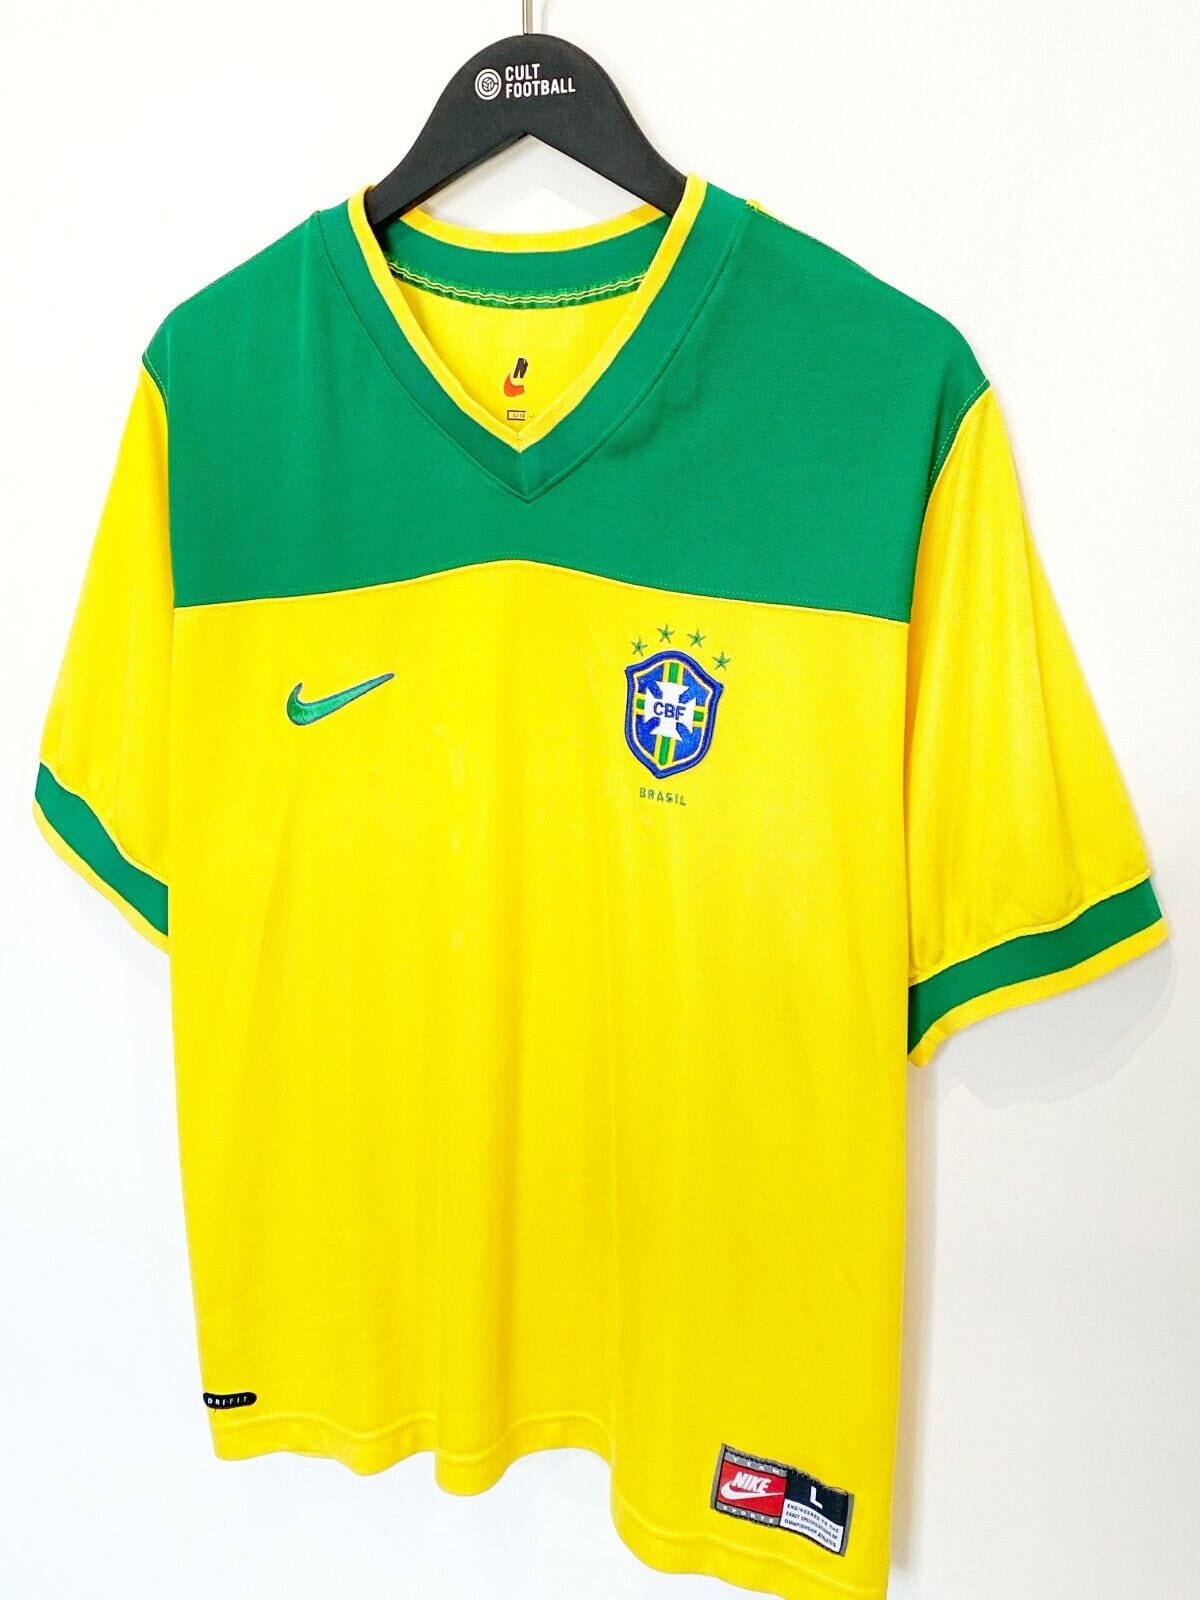 1998 yellow Brazil Nike shirt, retroiscooler